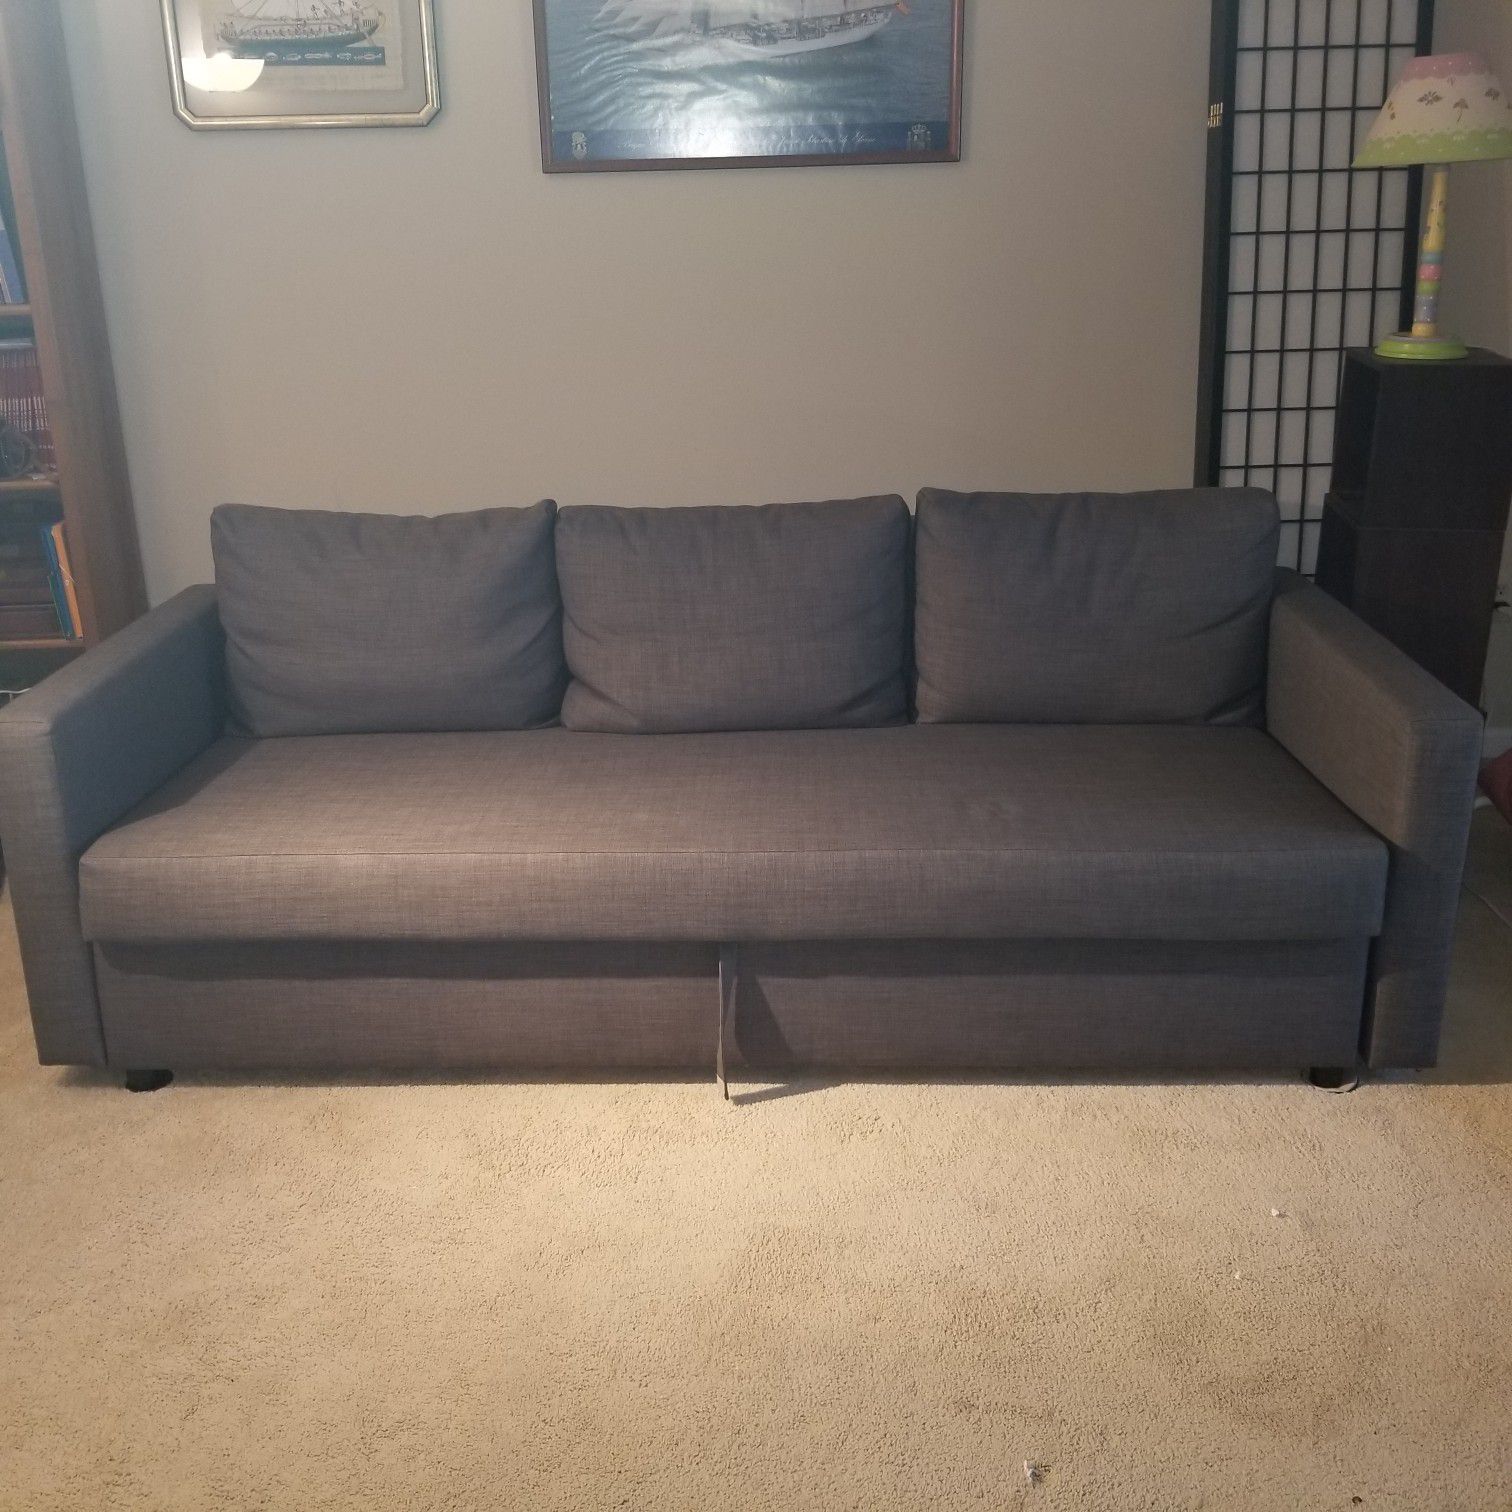 IKEA bed sofa